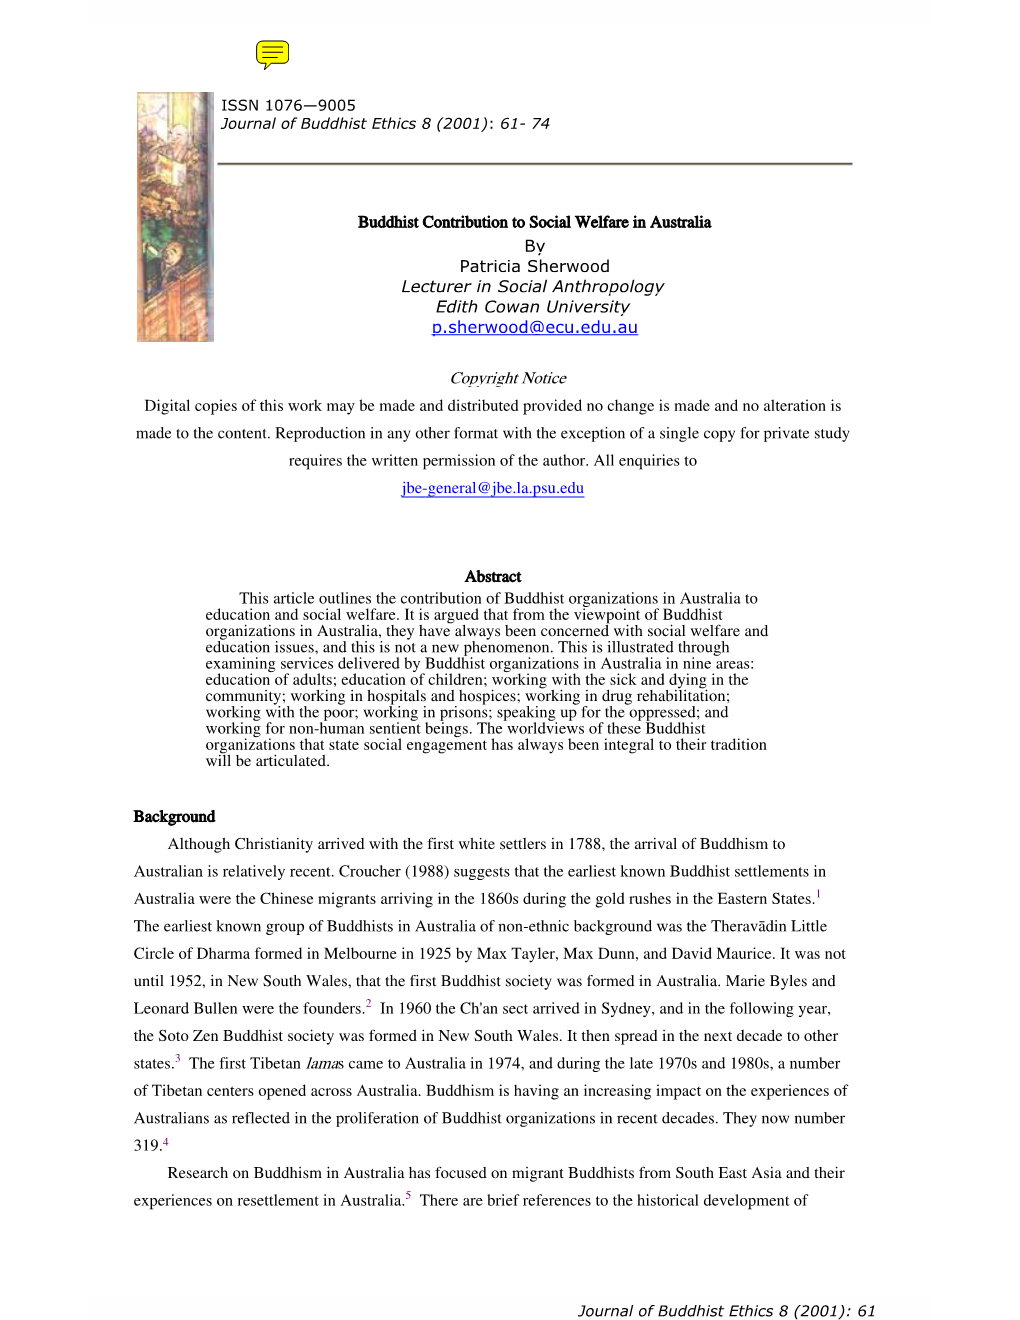 Buddhist Contribution to Social Welfare in Australia by Patricia Sherwood Lecturer in Social Anthropology Edith Cowan University P.Sherwood@Ecu.Edu.Au